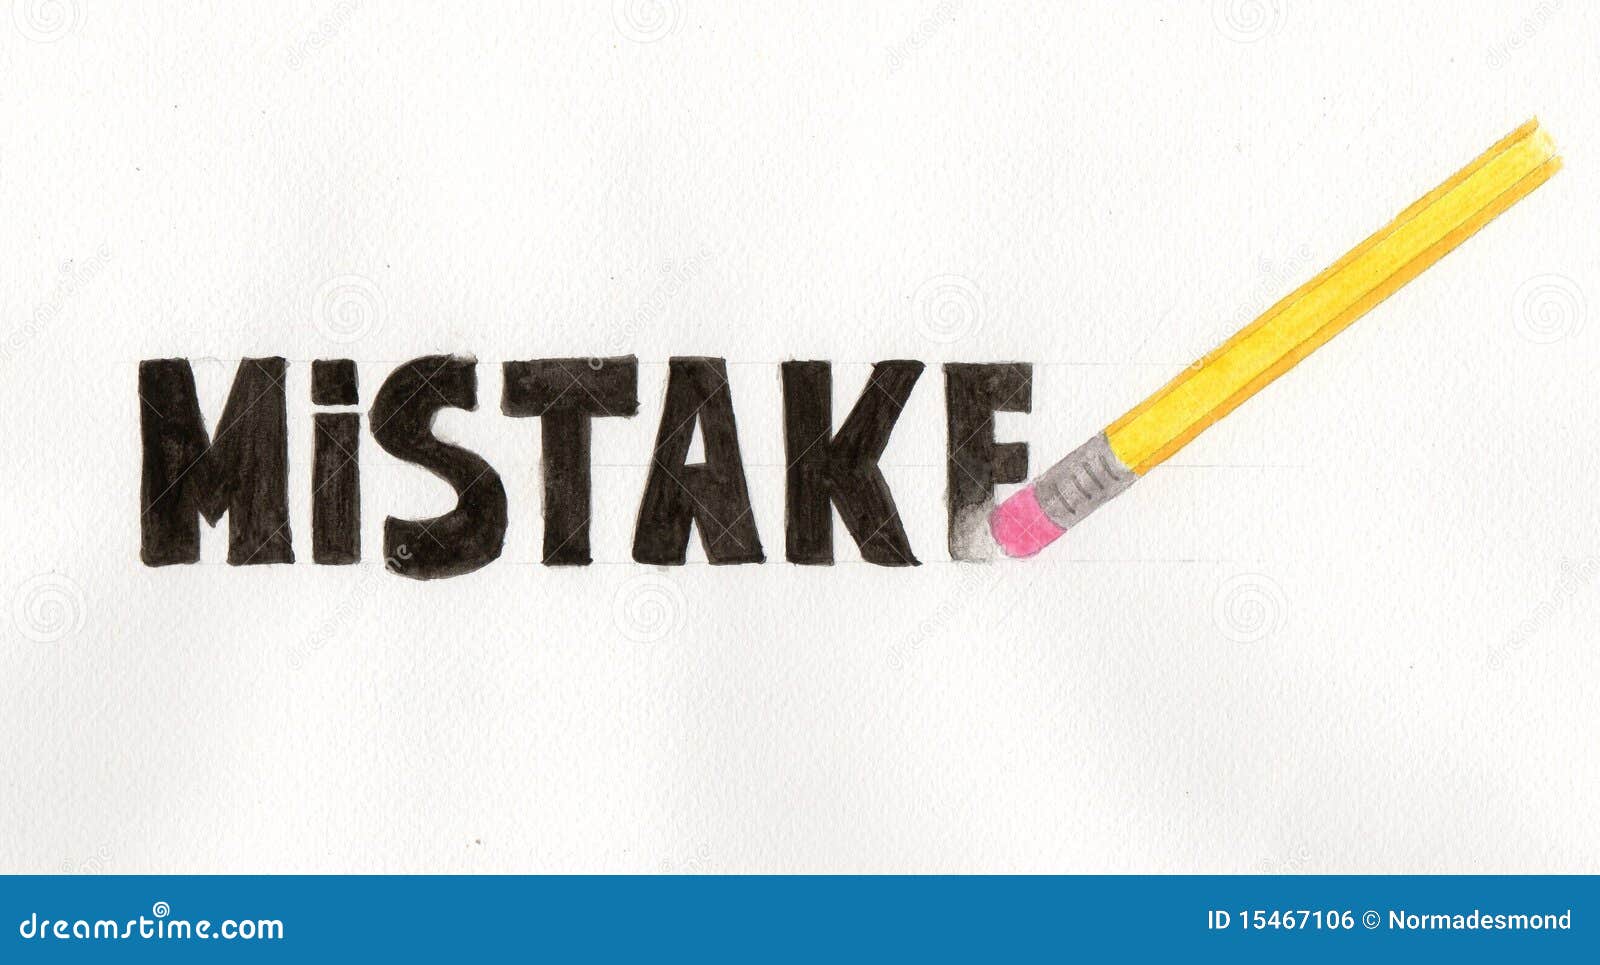 erase your mistakes